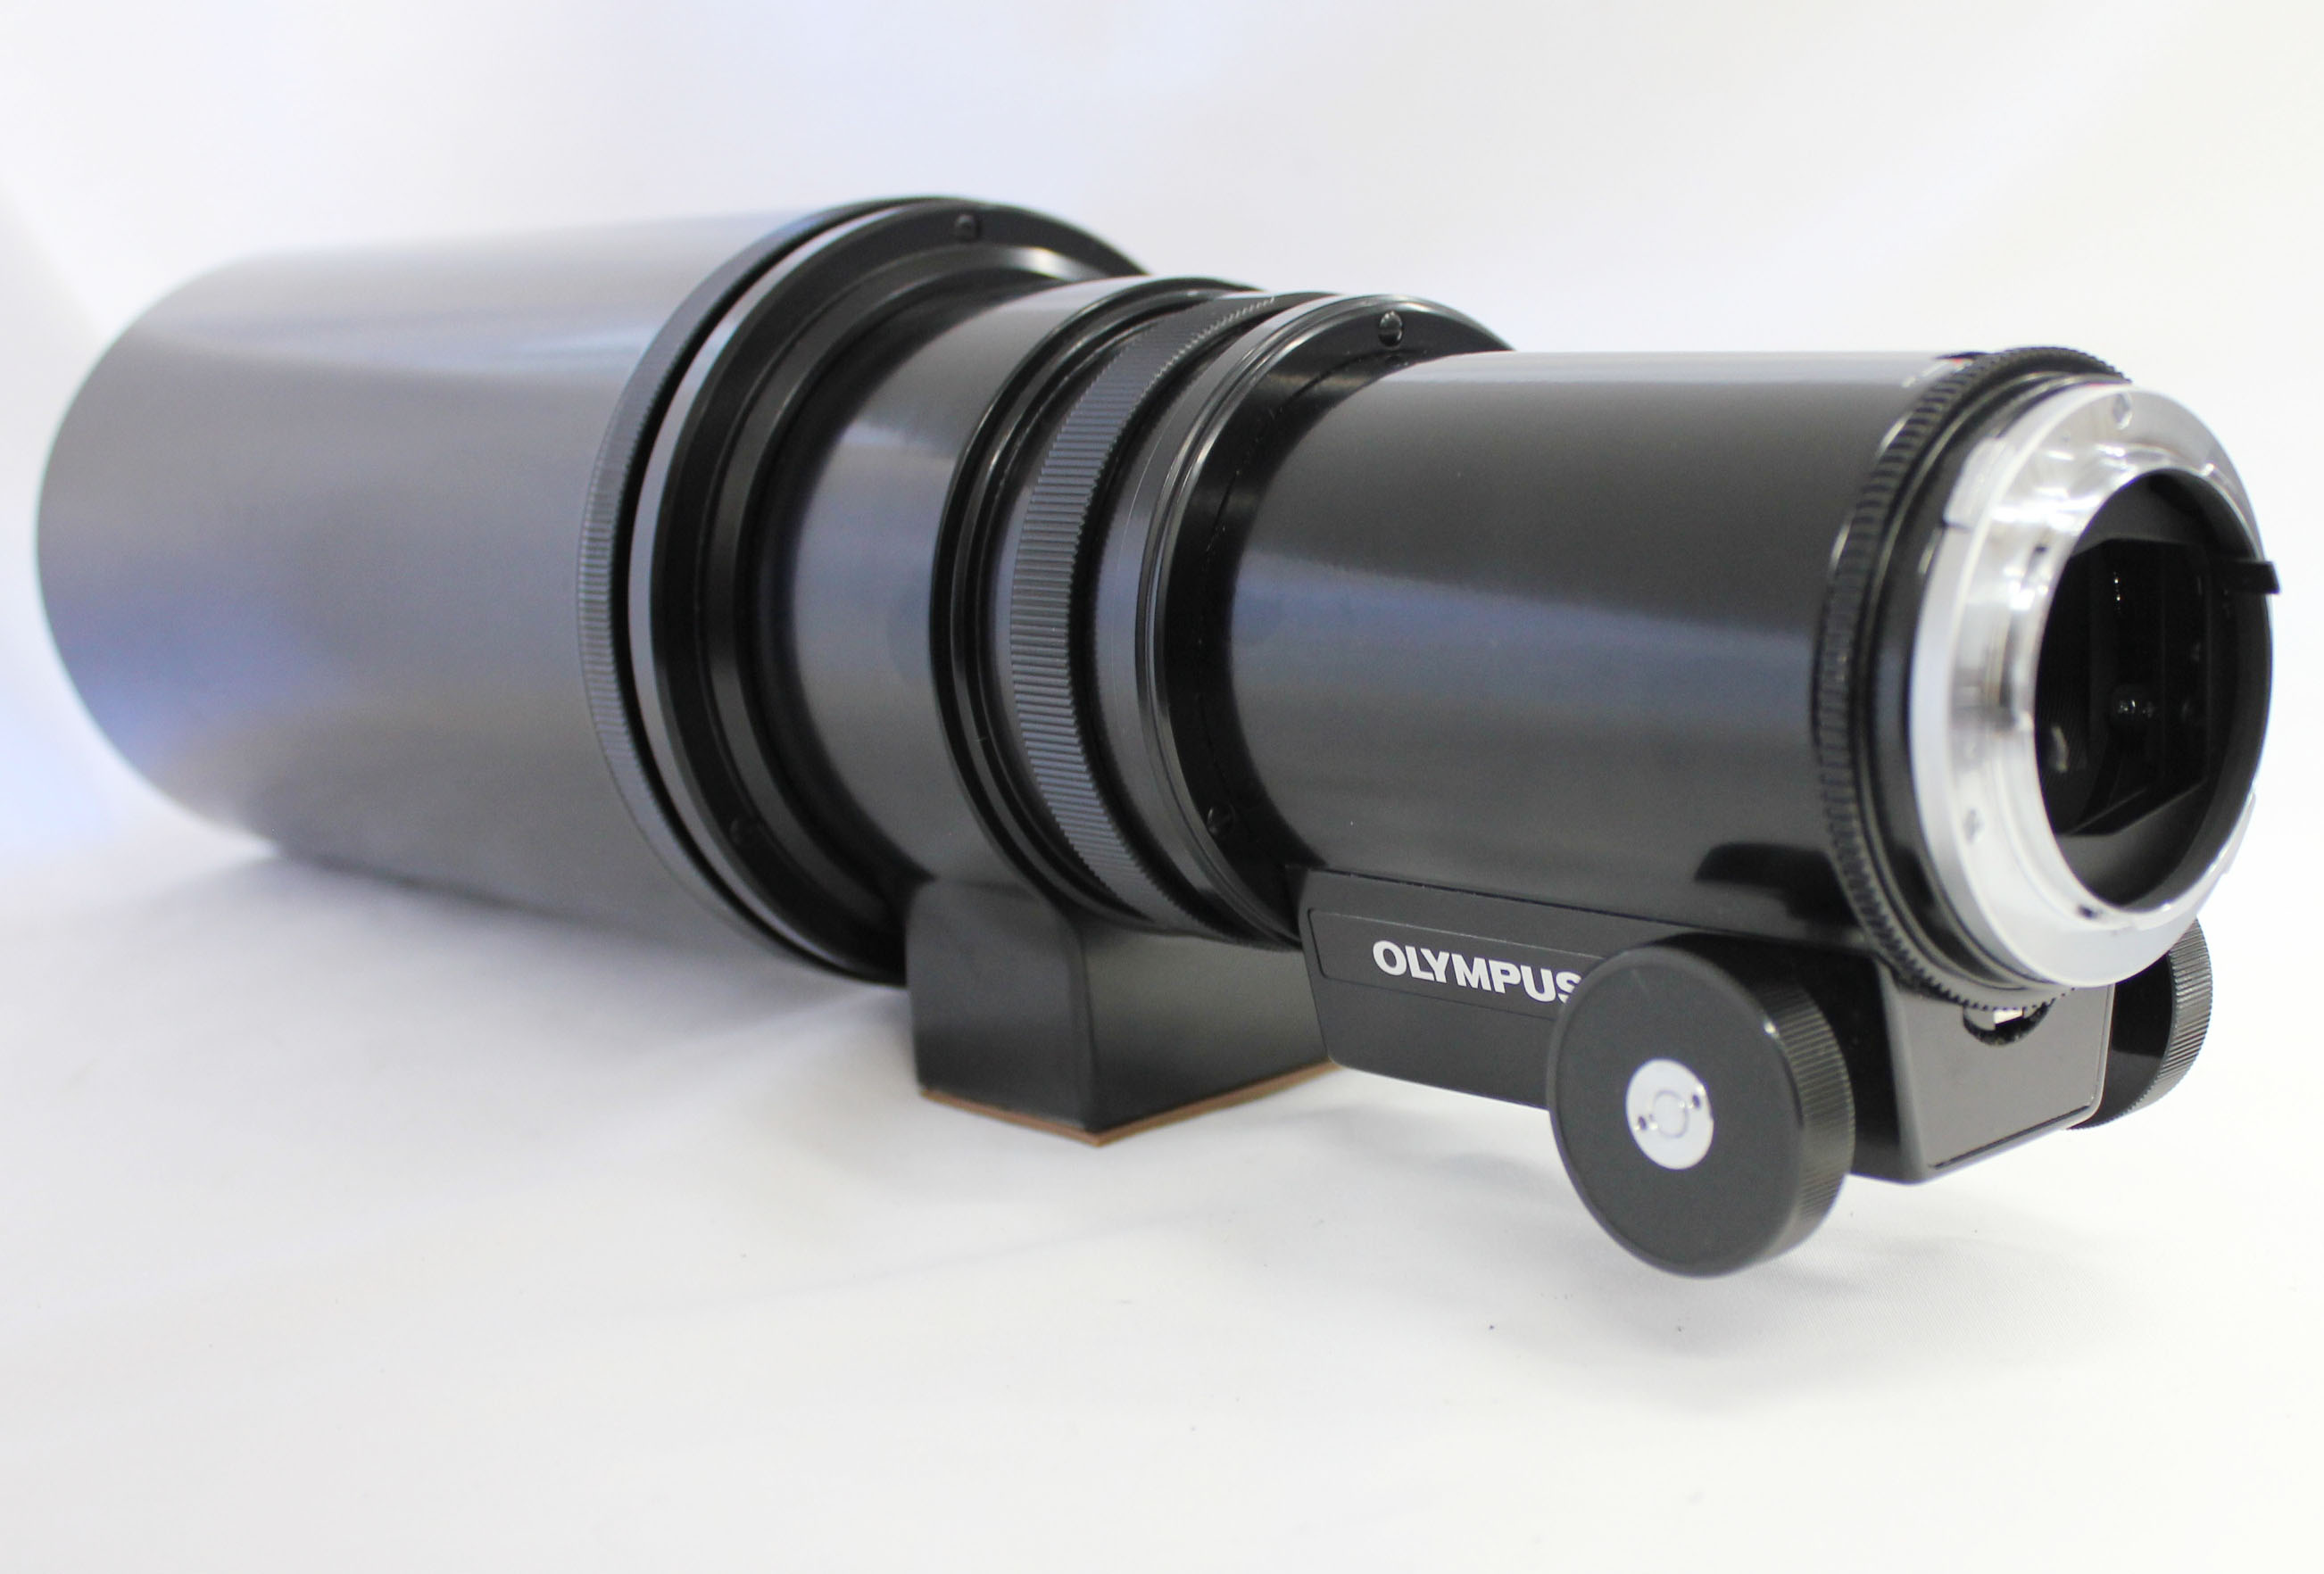  Olympus OM-System Zuiko Auto-T 600mm F/6.5 MF Super Telephoto Lens from Japan Photo 5